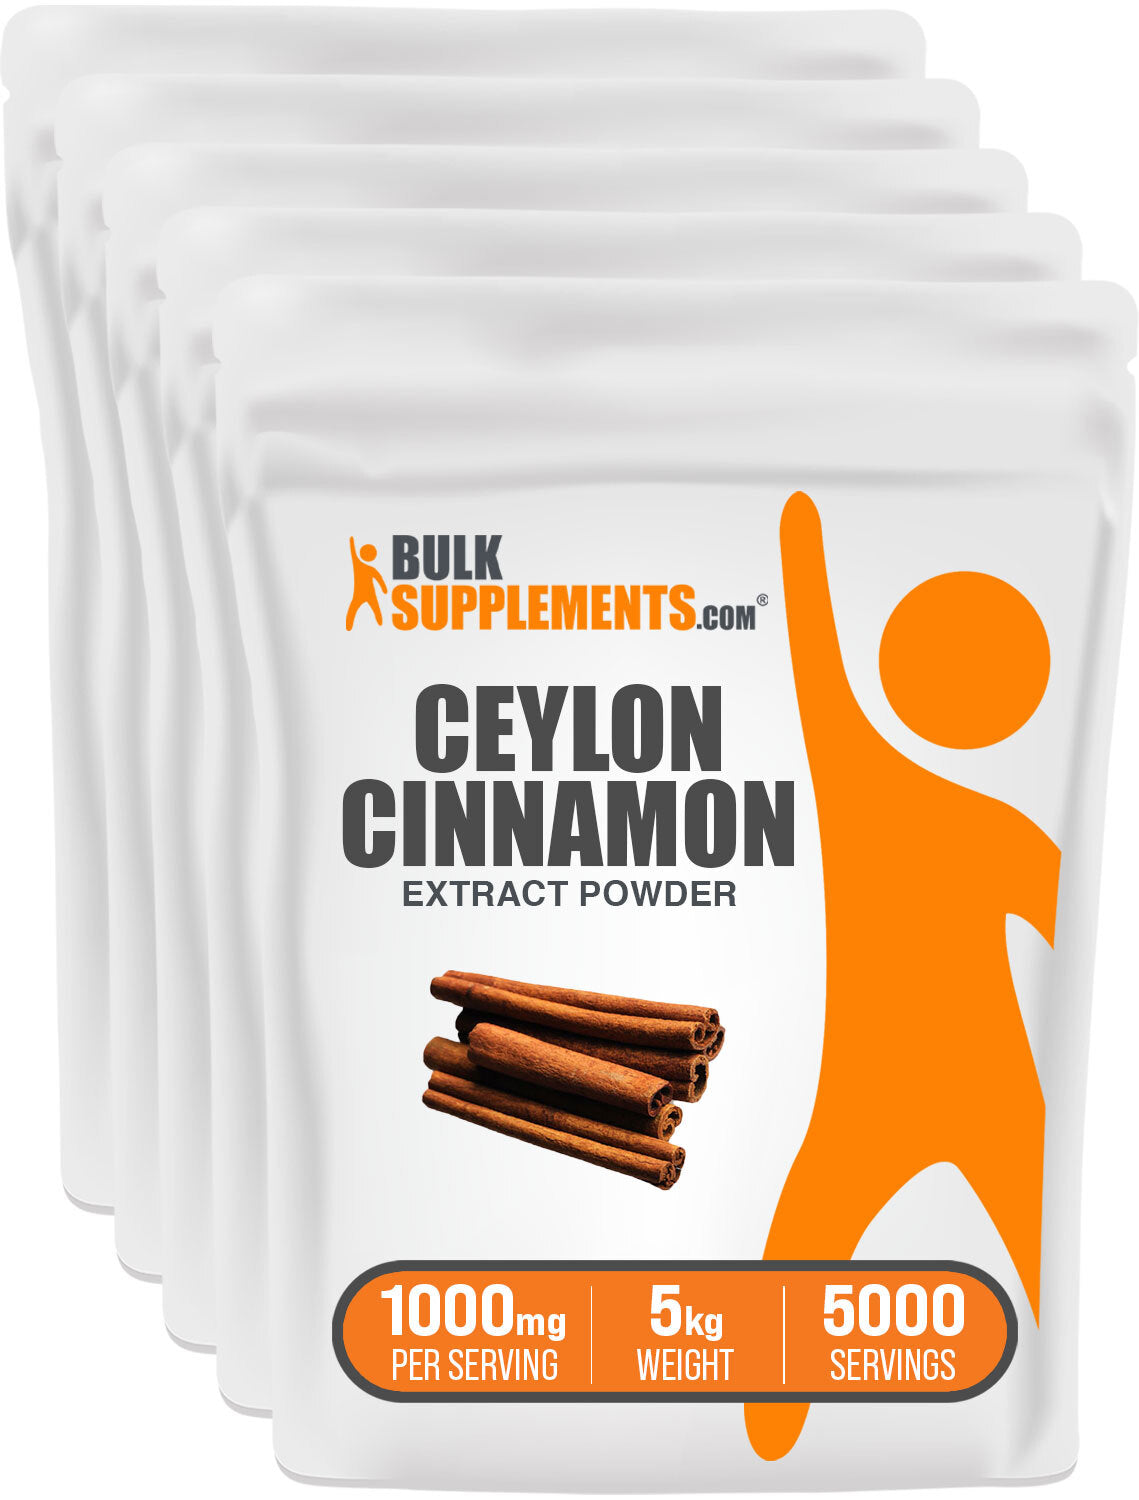 5kg cinnamon extract